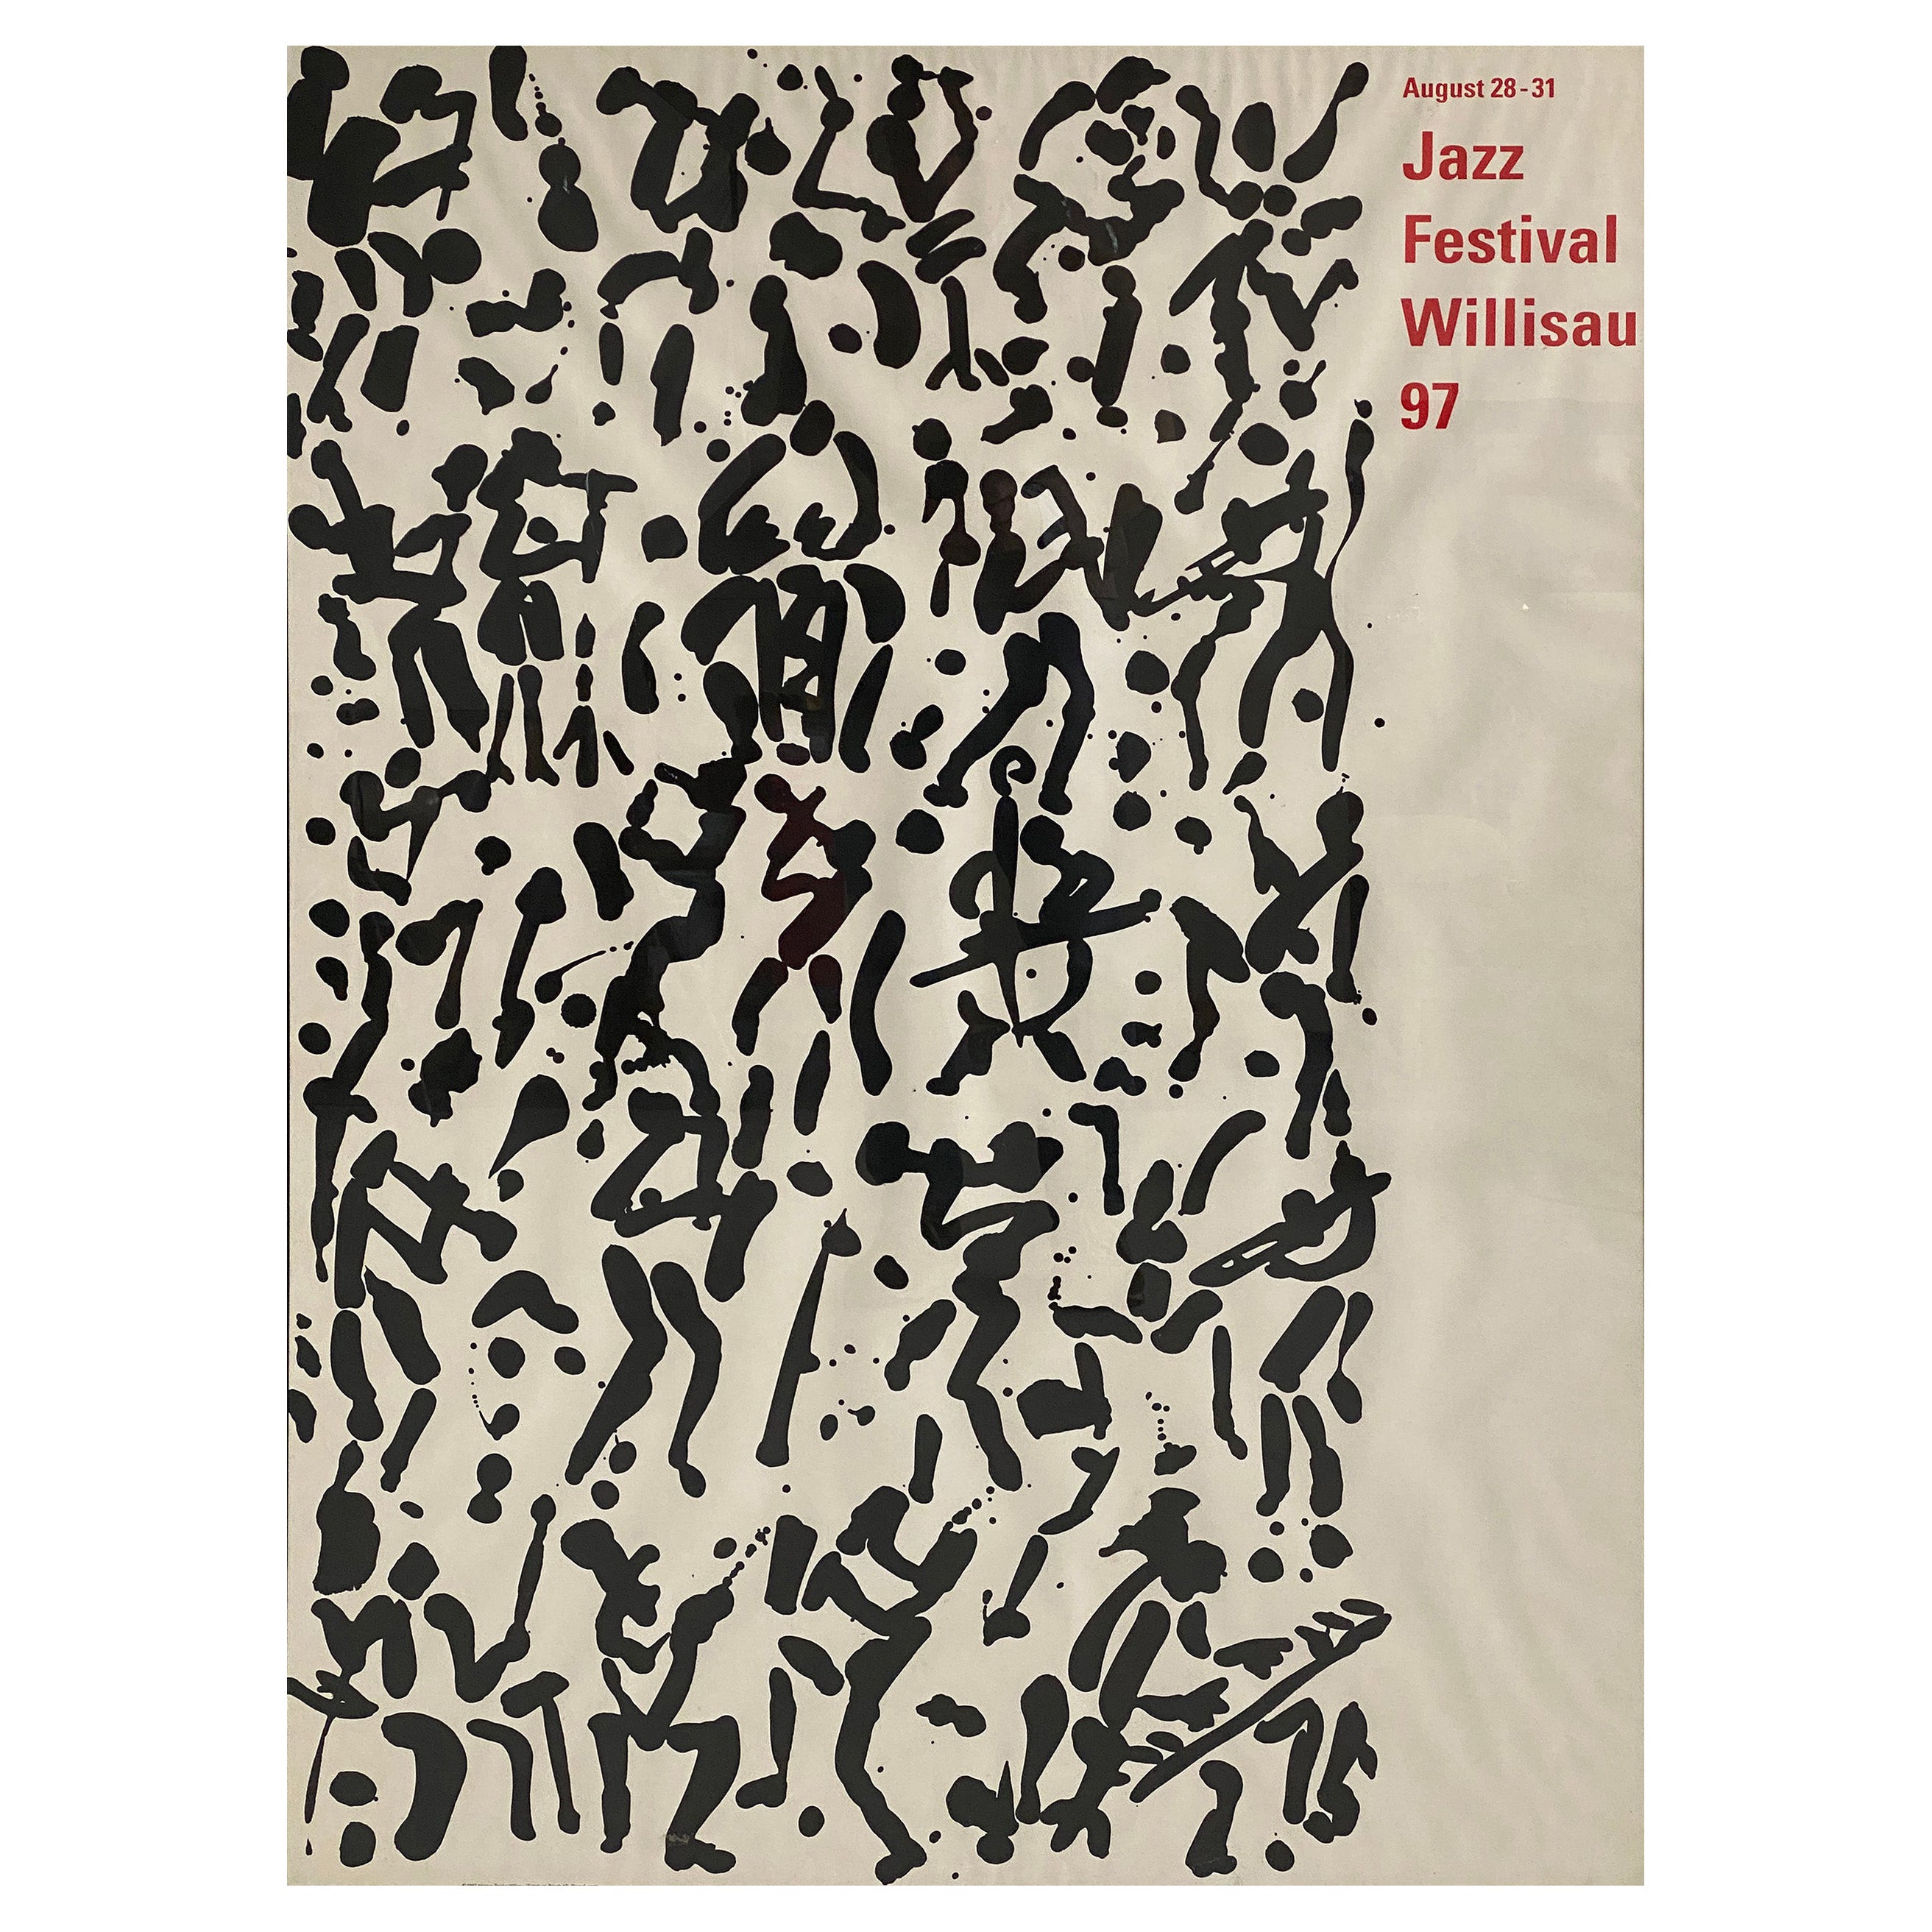 Festival de jazz Willisau de Niklaus Troxler, 1997 en vente